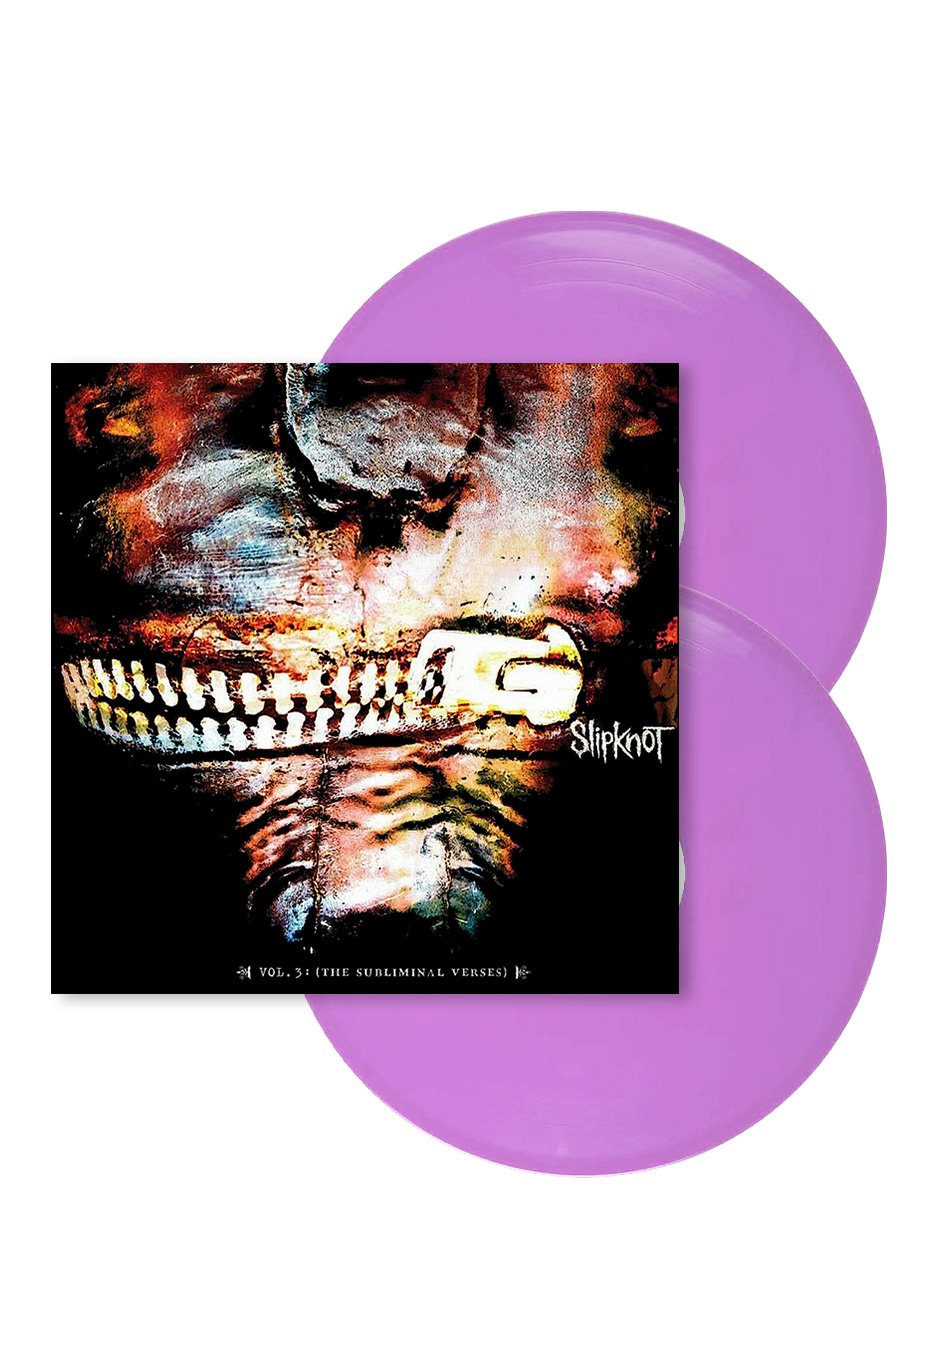 Slipknot - Vol.3 The Subliminal Verses Violet - Colored 2 Vinyl